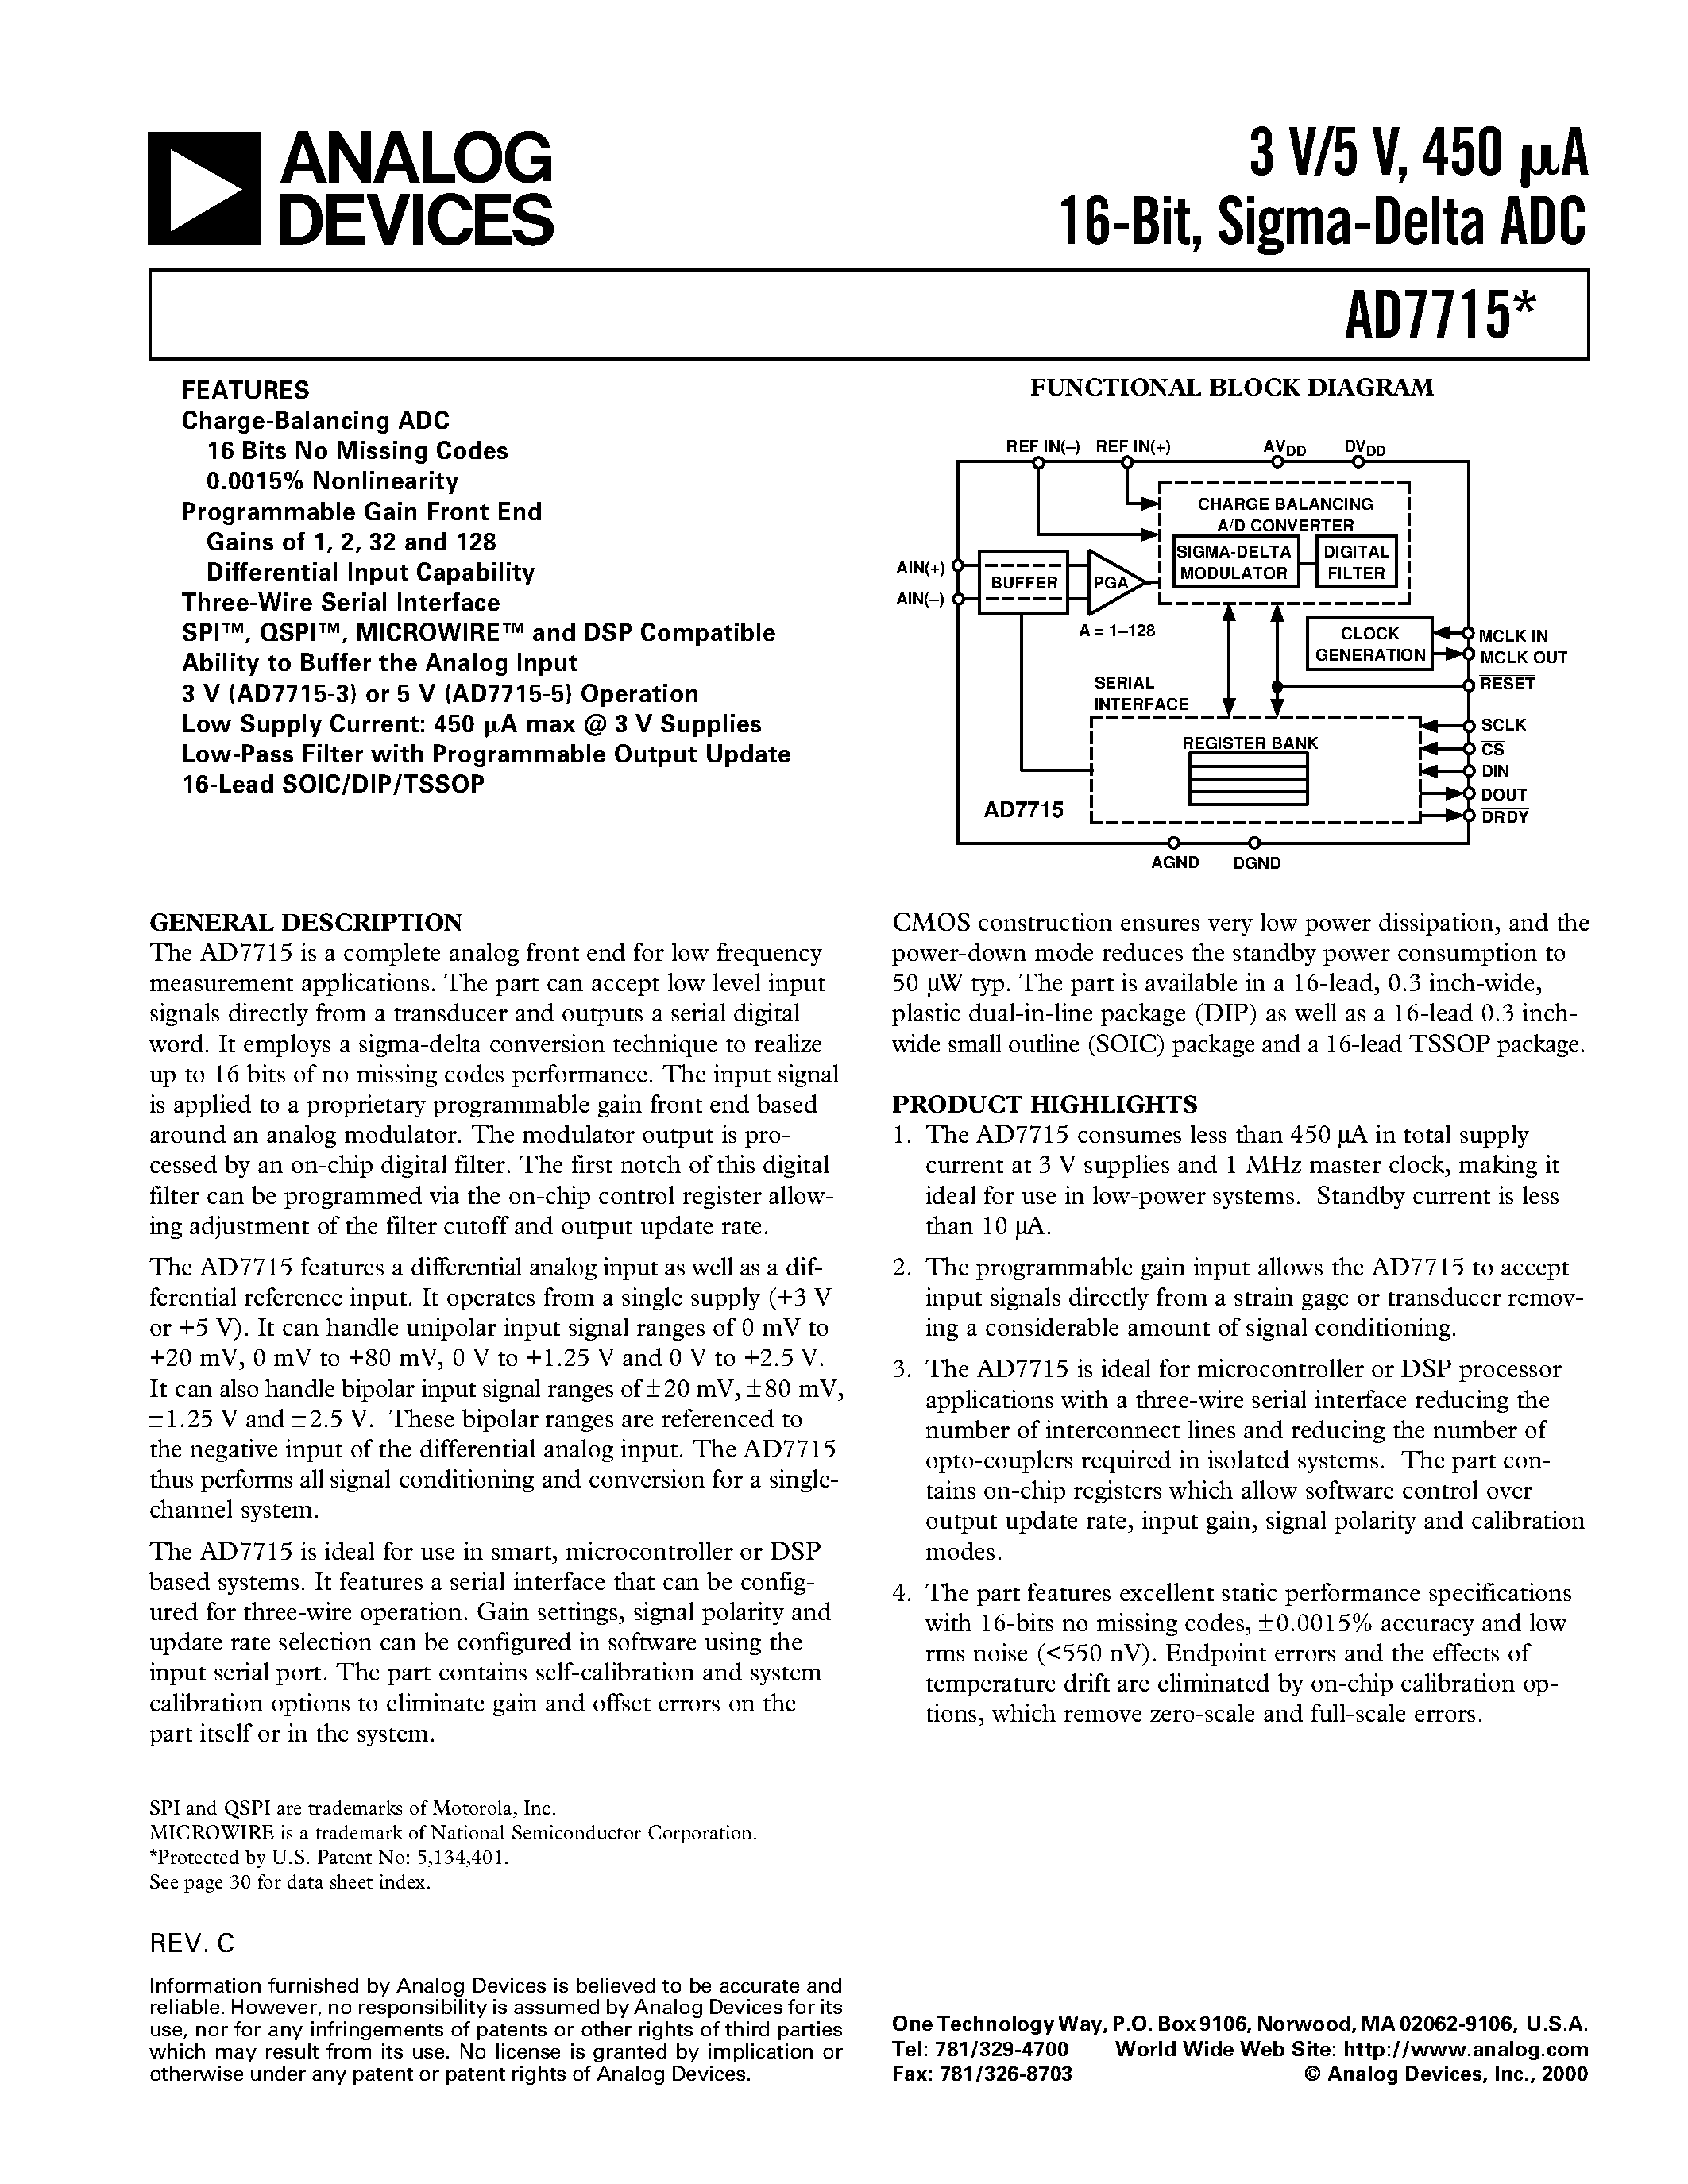 Datasheet AD7715AN-5 - 3 V/5 V/ 450 uA 16-Bit/ Sigma-Delta ADC page 1